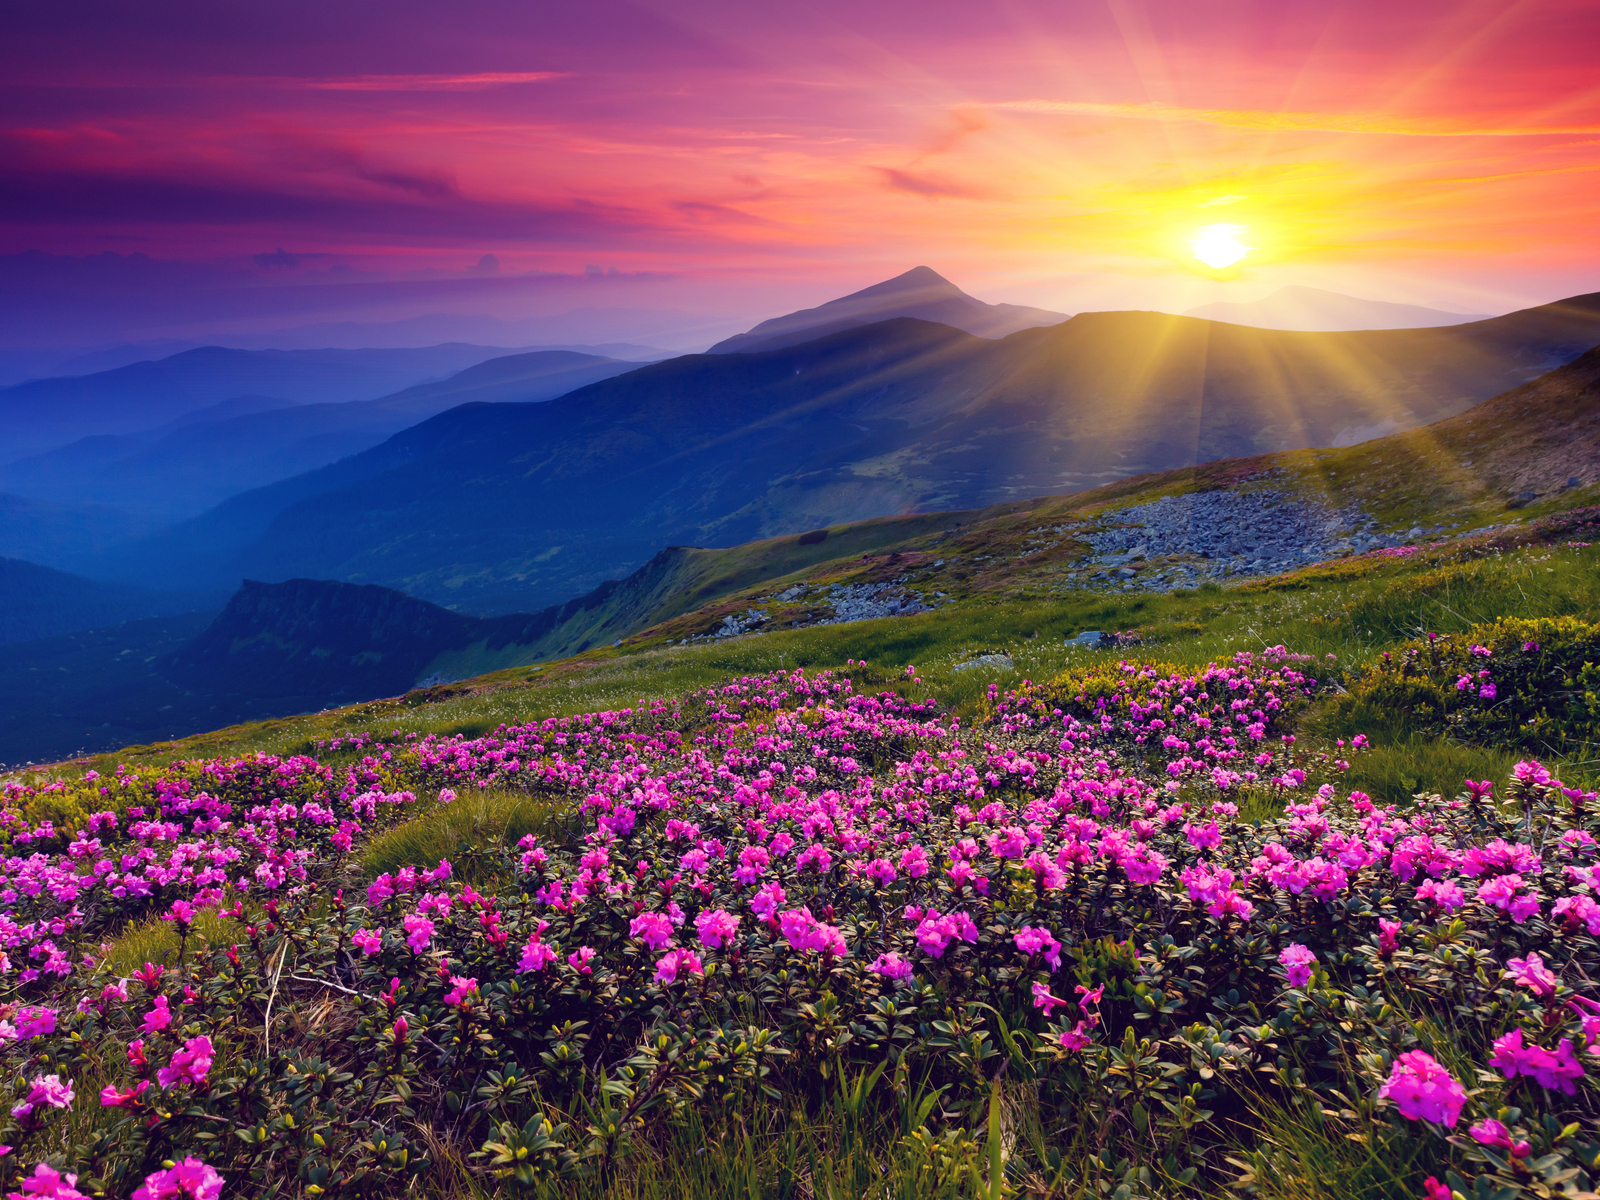 https://blogger.googleusercontent.com/img/b/R29vZ2xl/AVvXsEhqdyatzjbvh7l6tbLbZSEnsZ75e4VAgHVACwpkhFjWBVirECFvkOzyjfOcg3xb8K9yUzCJ76hhaWqBbJJ8ne2vRsNoep6f73DwtumtVAAPd8lBq-xtZLYO4c6jg-nw5dzdqKuMQPUzTRGq/s1600/Meadows-Purple-Wild-Flowers-Mountains-and-Sunset-HD-Wallpaper--NatureWallBase.Blogspot.Com.jpg